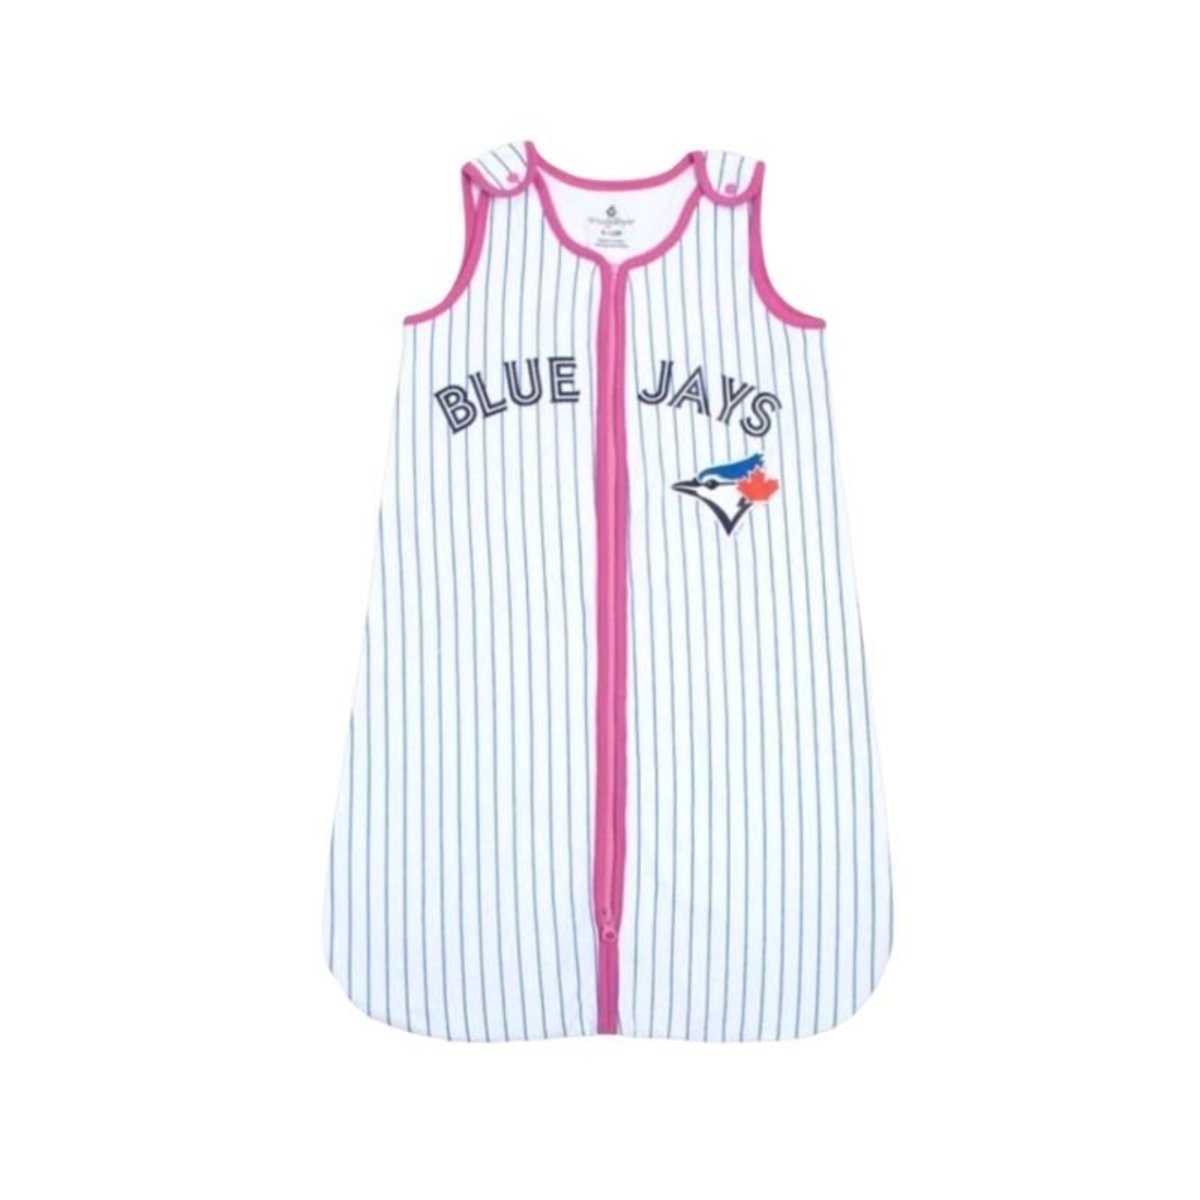 Snugabye Toronto Blue Jays 3 Piece Infant Bodysuit Set 9-12 Months